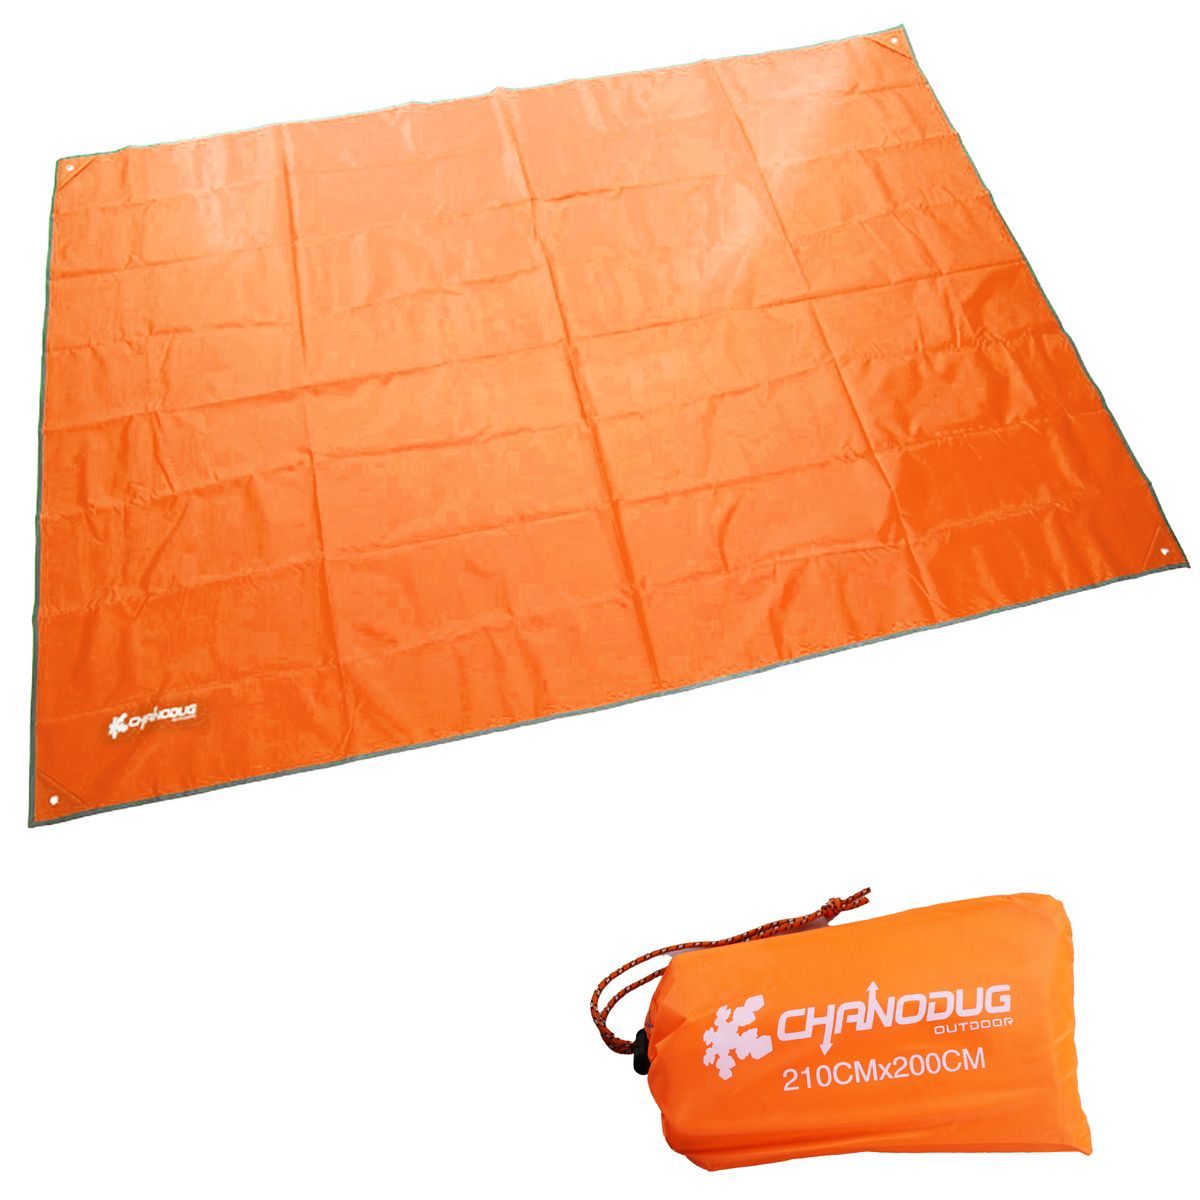 Chanodug 2.1x2M Waterproof Shade Floor & Rain Cover Tarp / Canopy FX8904-1